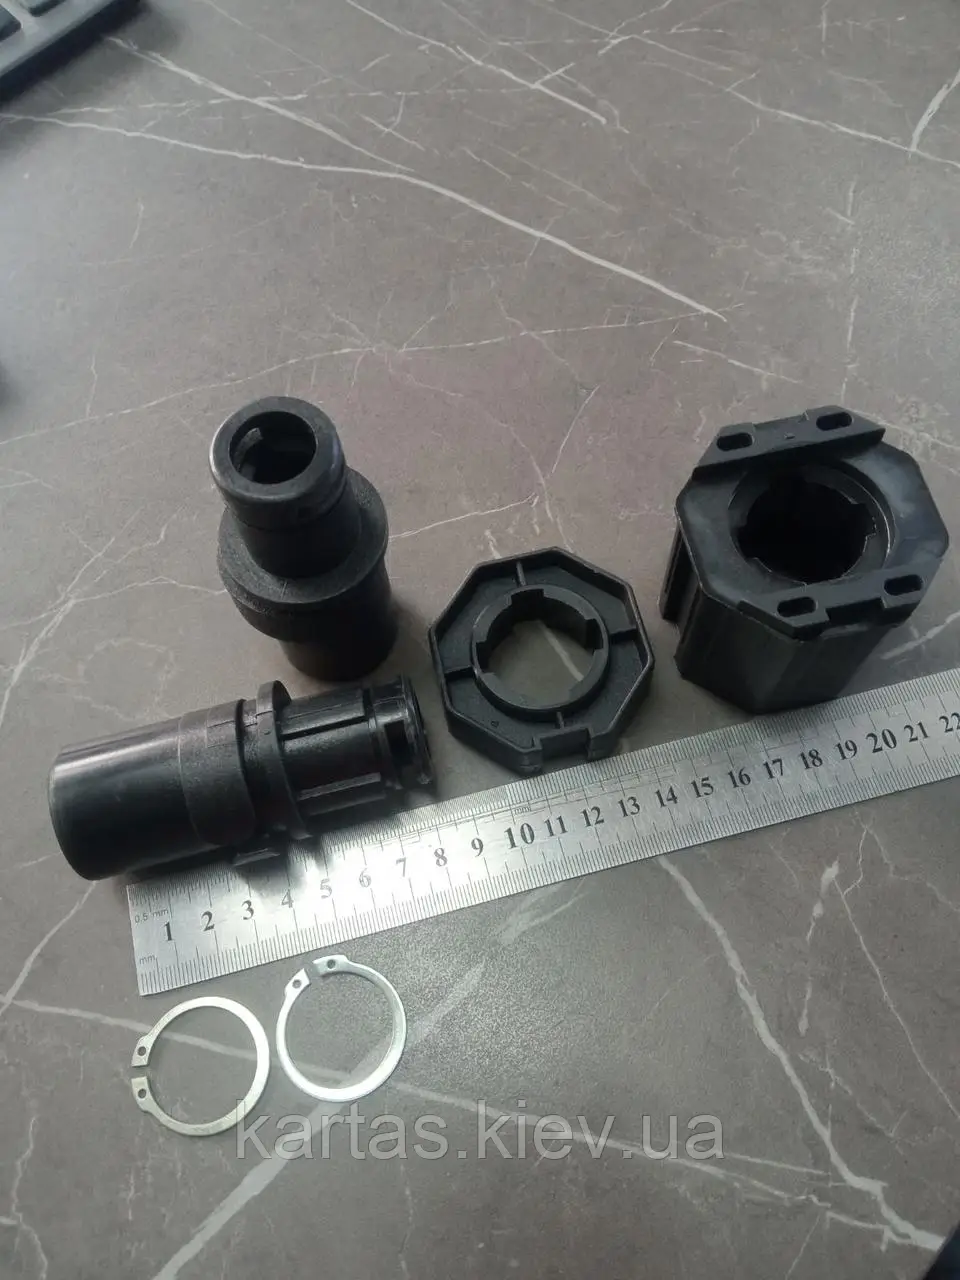 Рем/комплект на пружину 40 мм (пластик) для захисних ролет